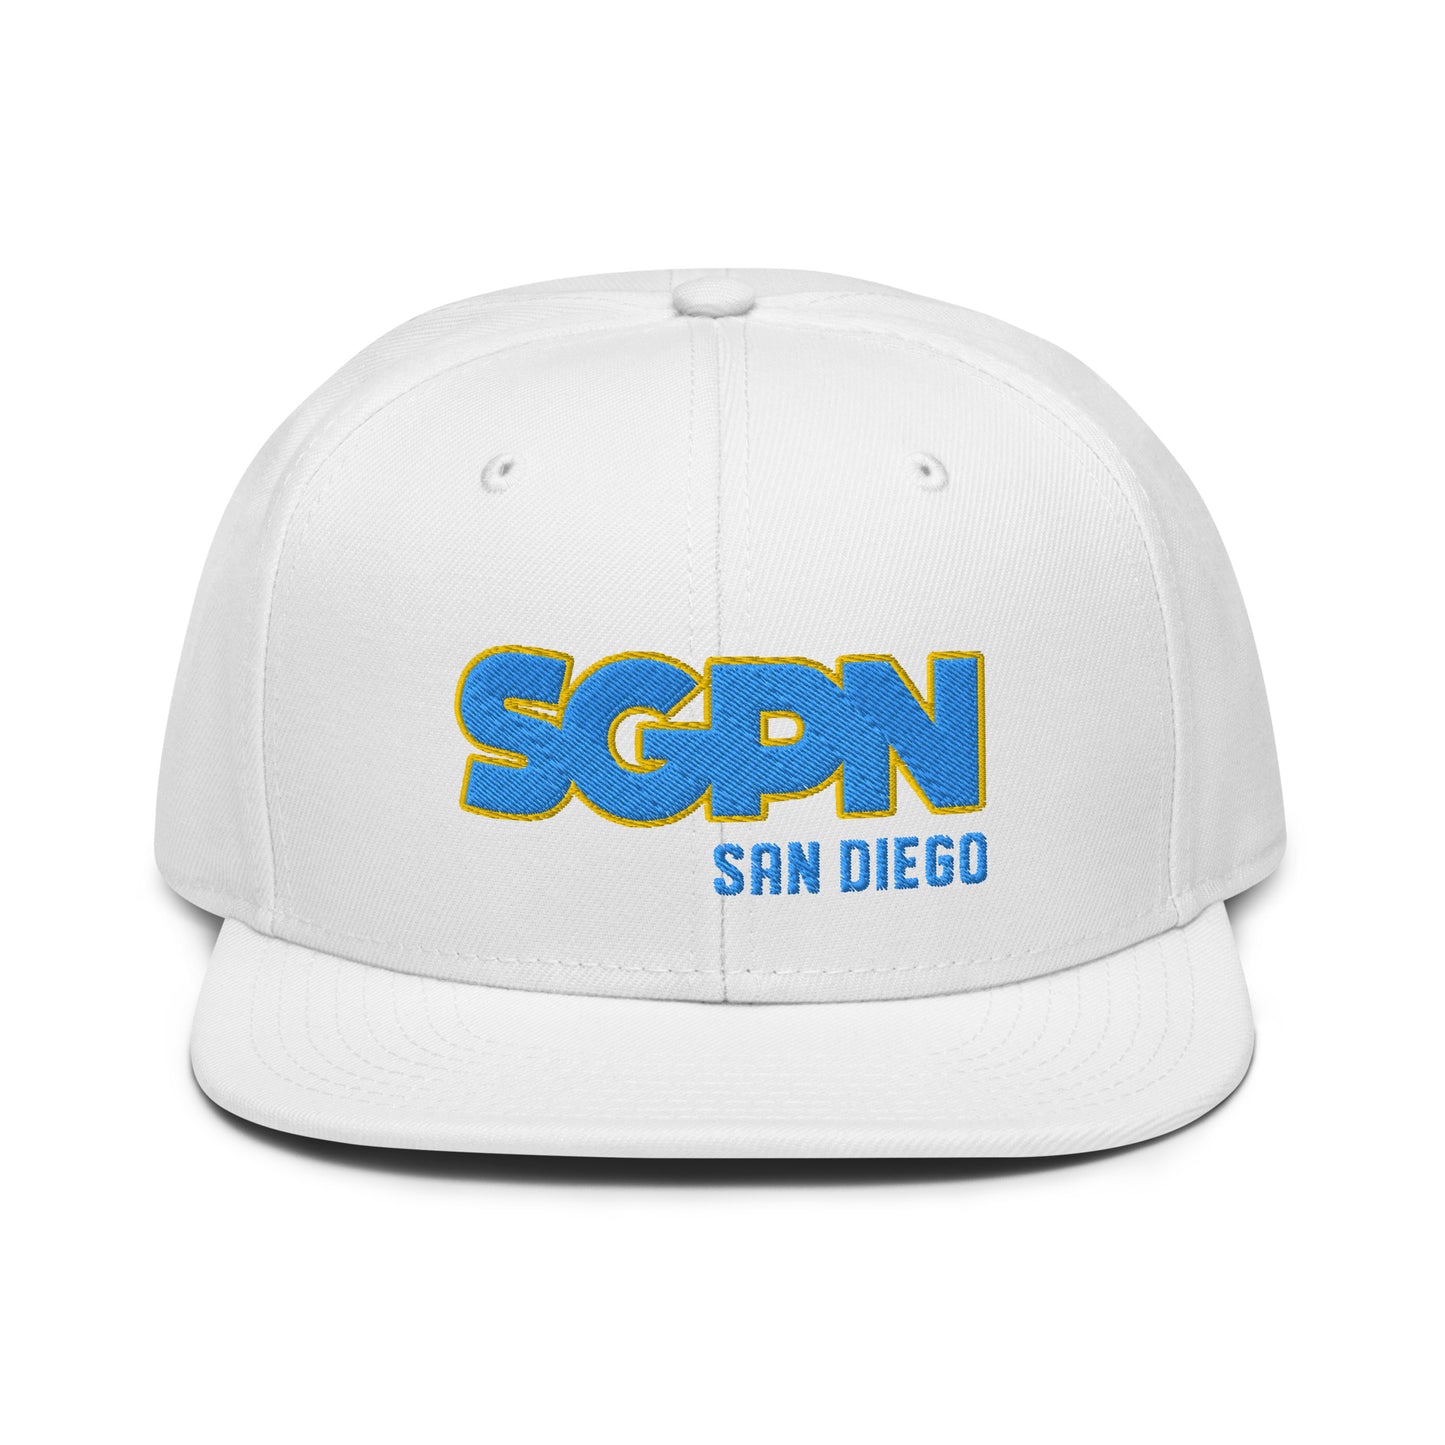 SGPN - San Diego edition - Snapback Hat  (2 thread color)